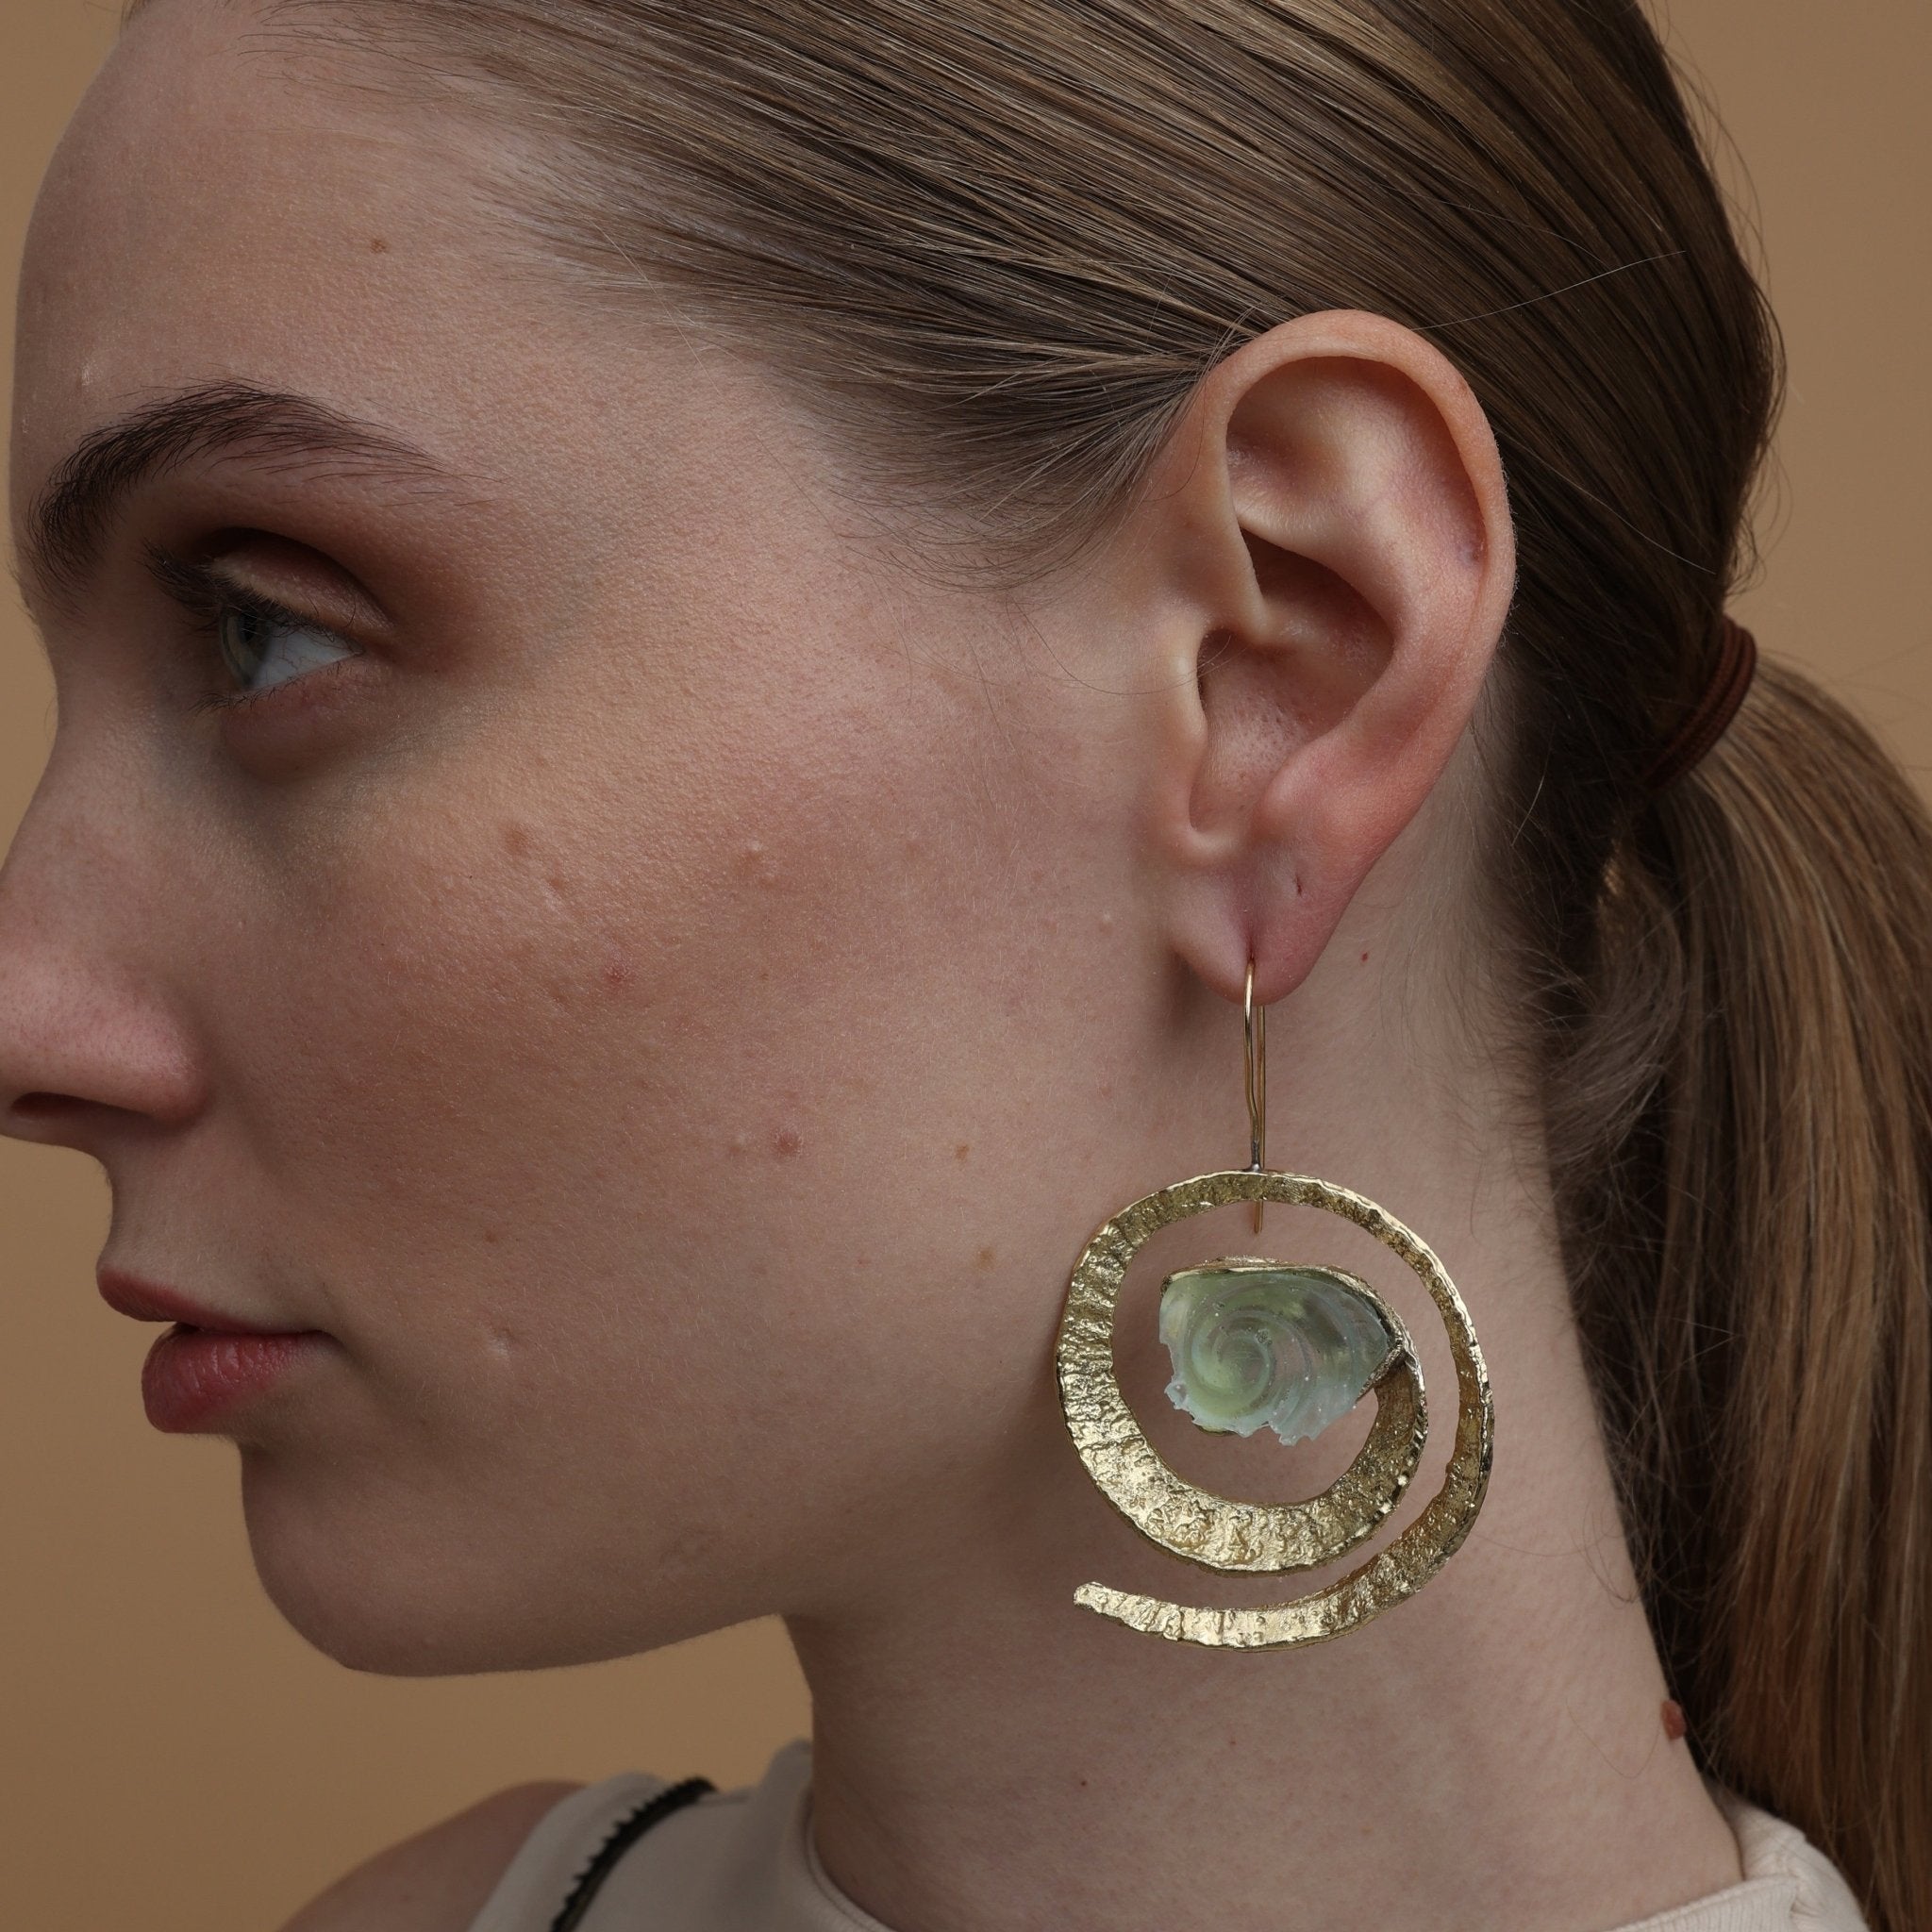 Aqua Resin Earrings - The Nancy Smillie Shop - Art, Jewellery & Designer Gifts Glasgow